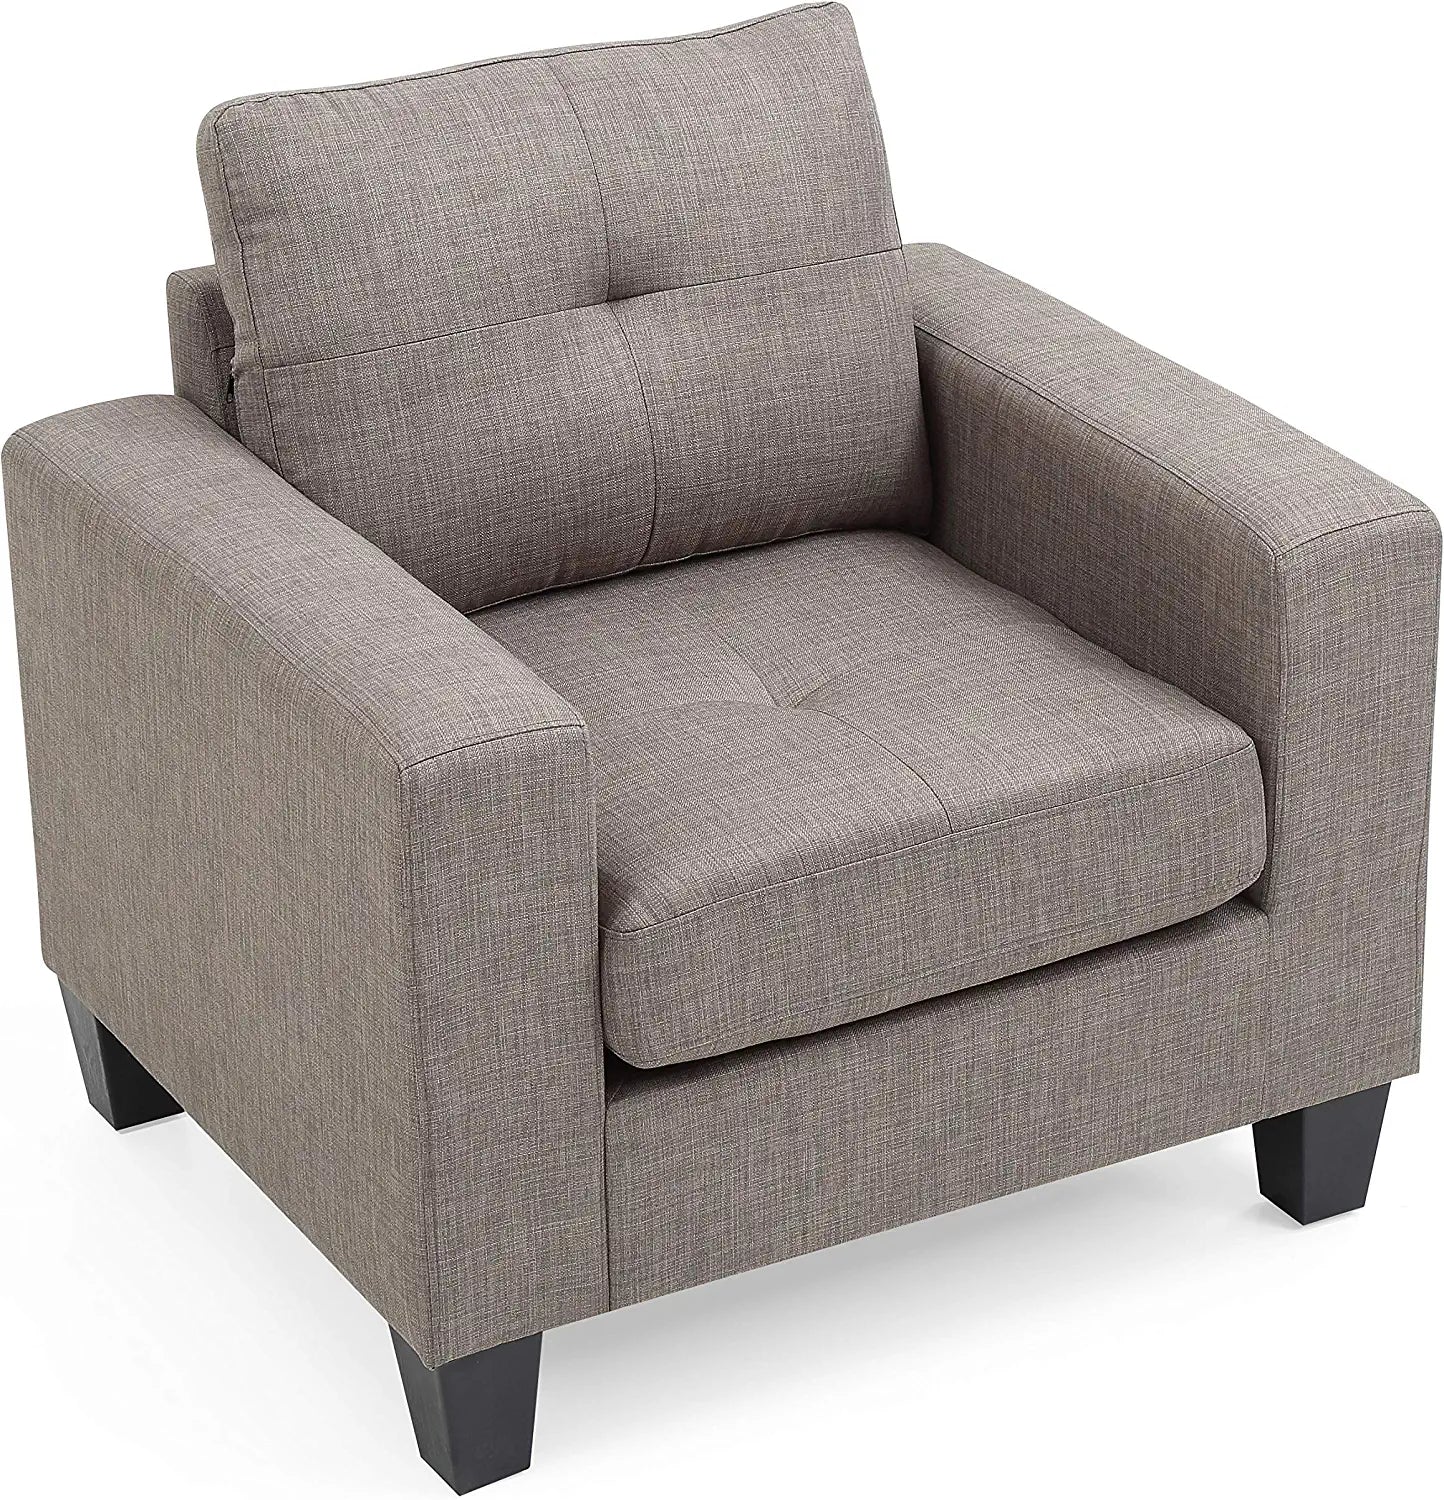 Glory Furniture Newbury Chair, Gray. Living Room Furniture, 36&#34; H x 35&#34; W x 32&#34; D